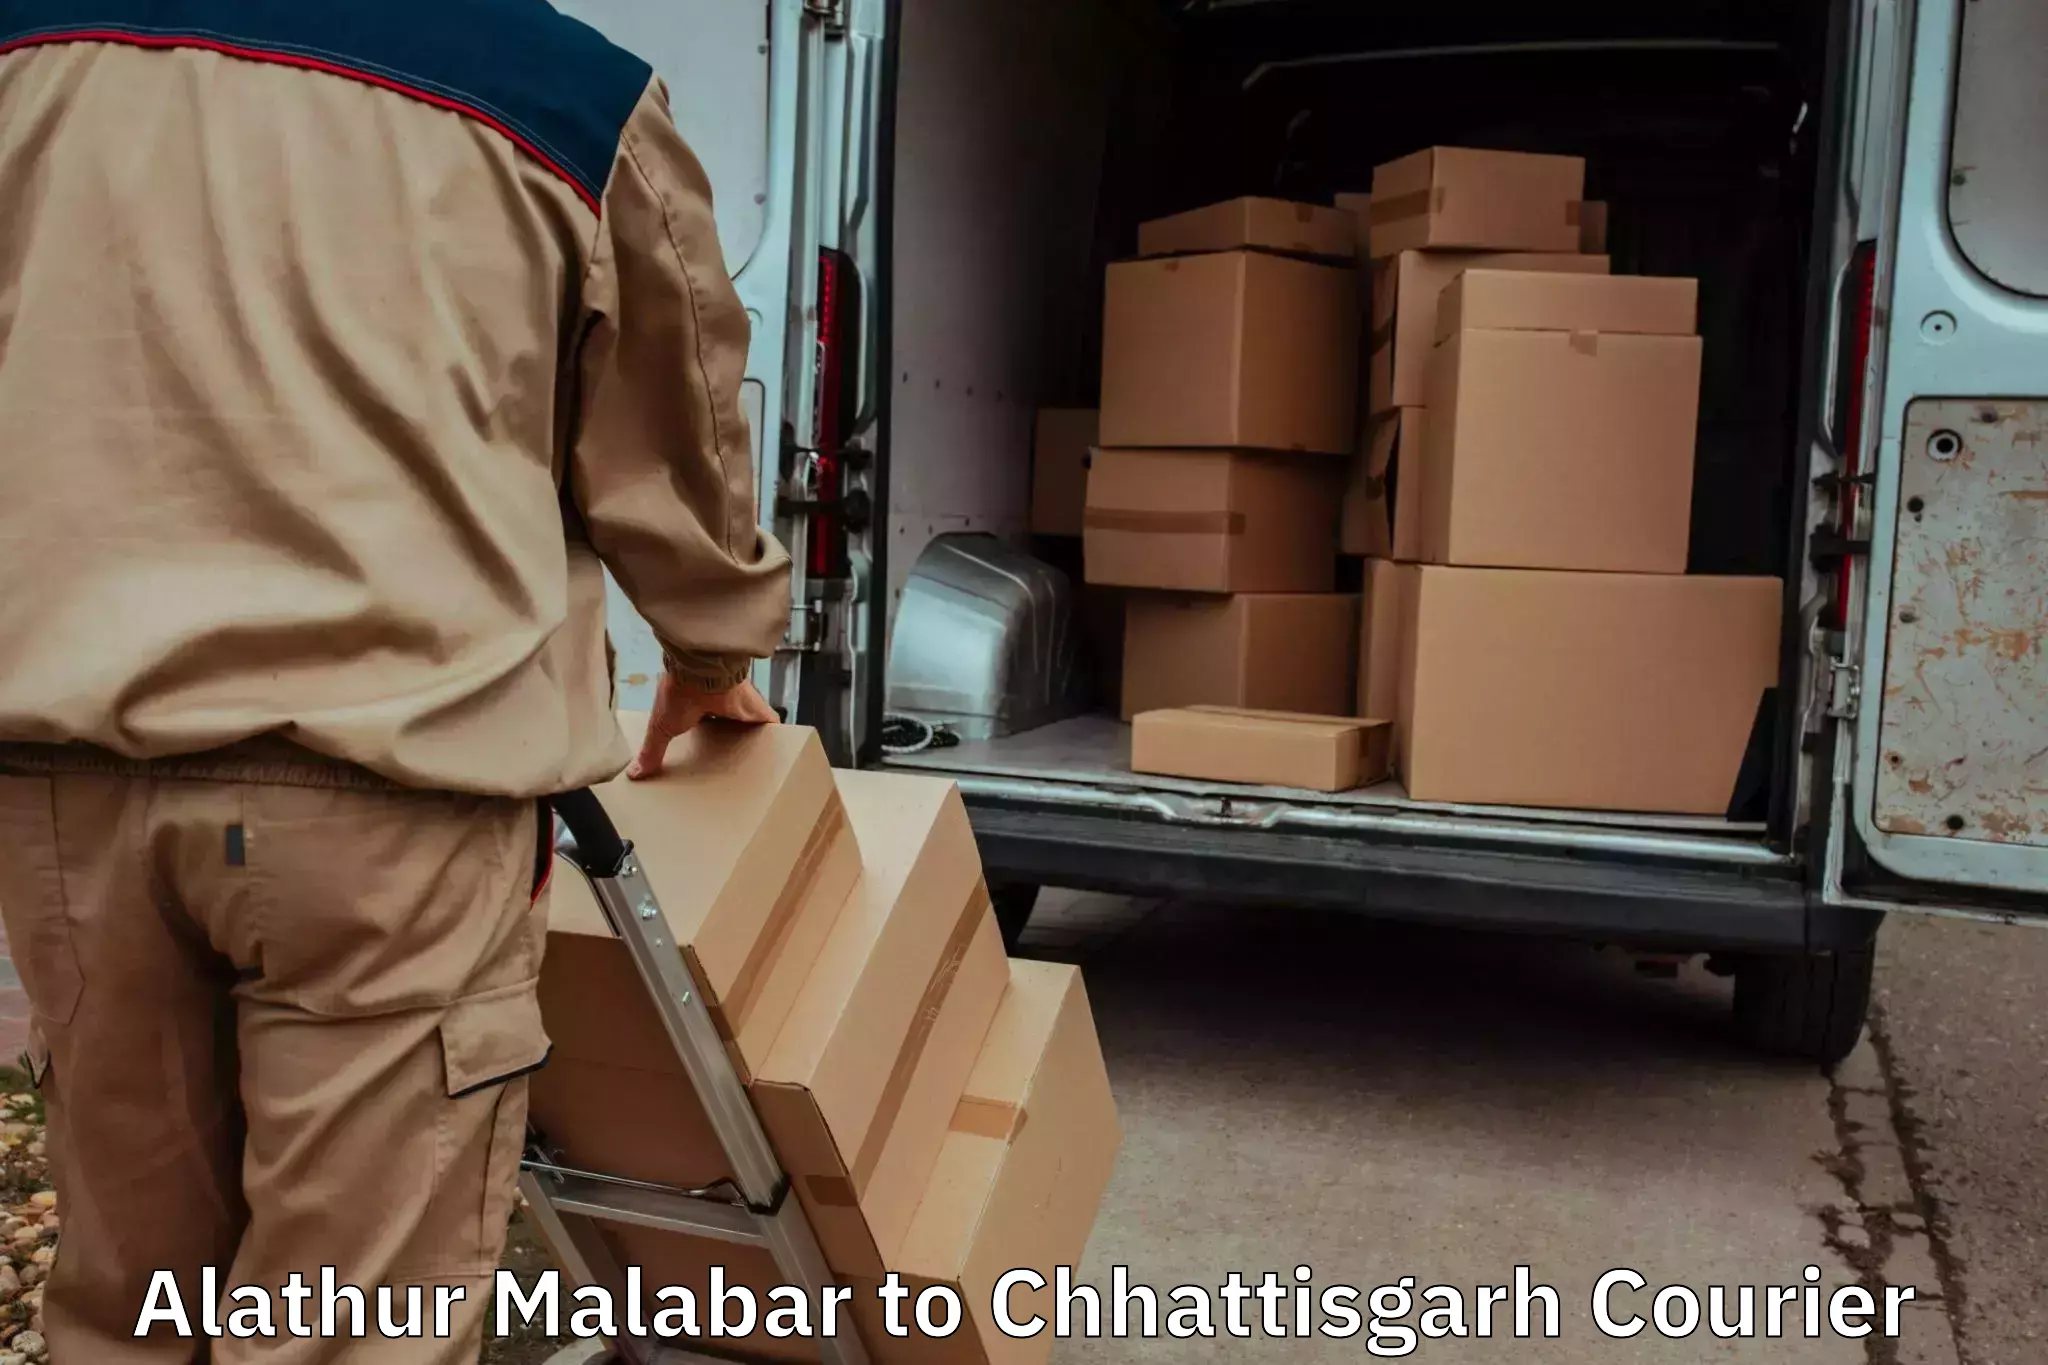 Furniture moving specialists Alathur Malabar to Bijapur Chhattisgarh